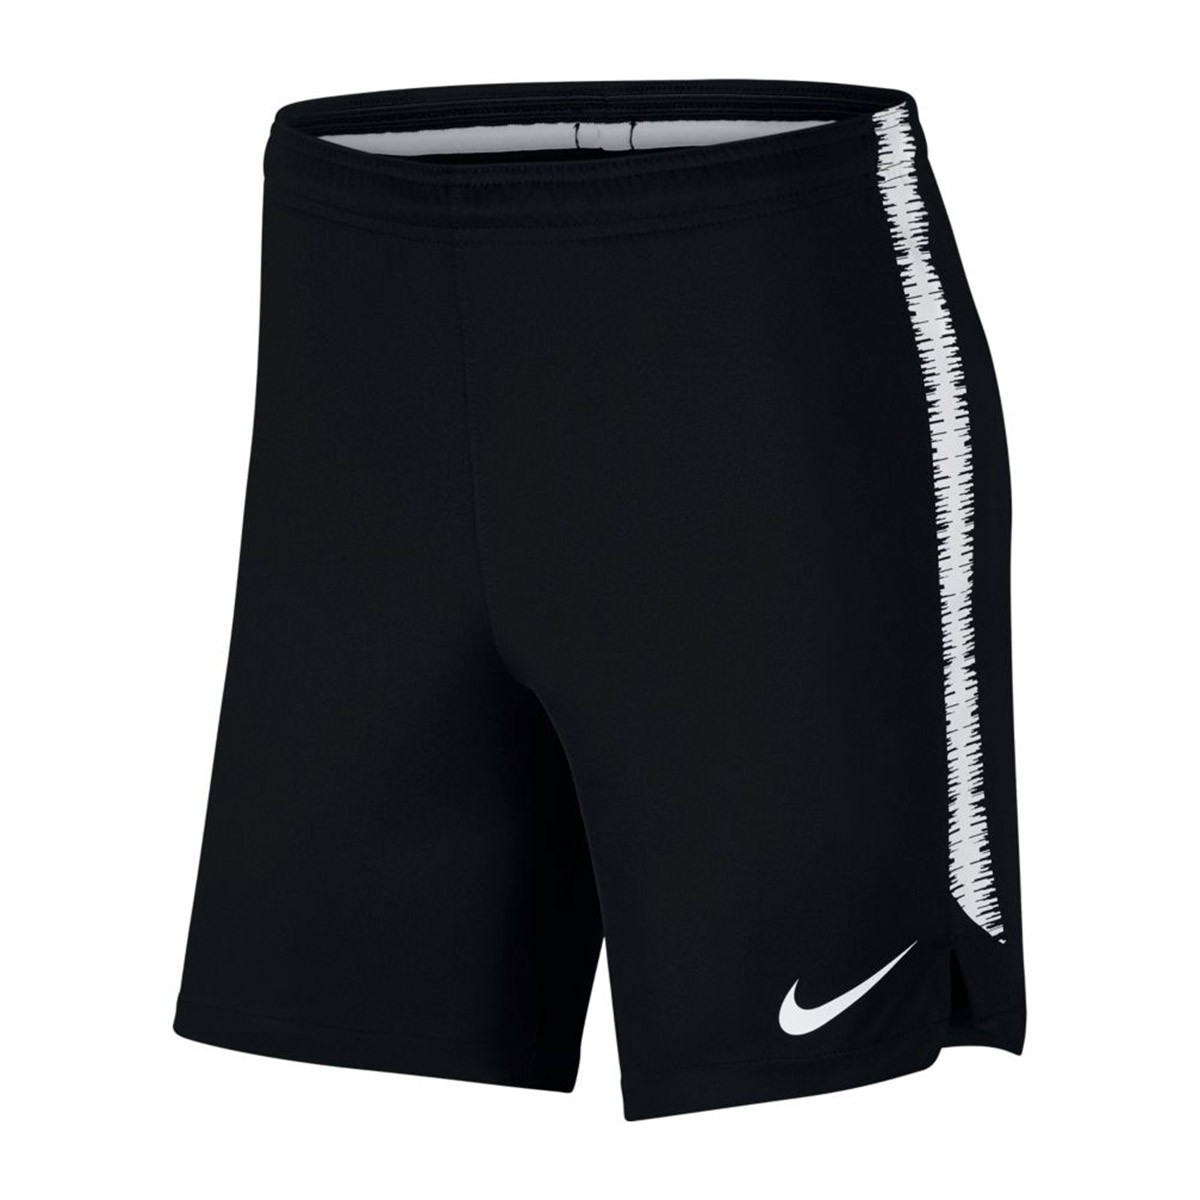 Shorts Nike Dry Squad Black-White 